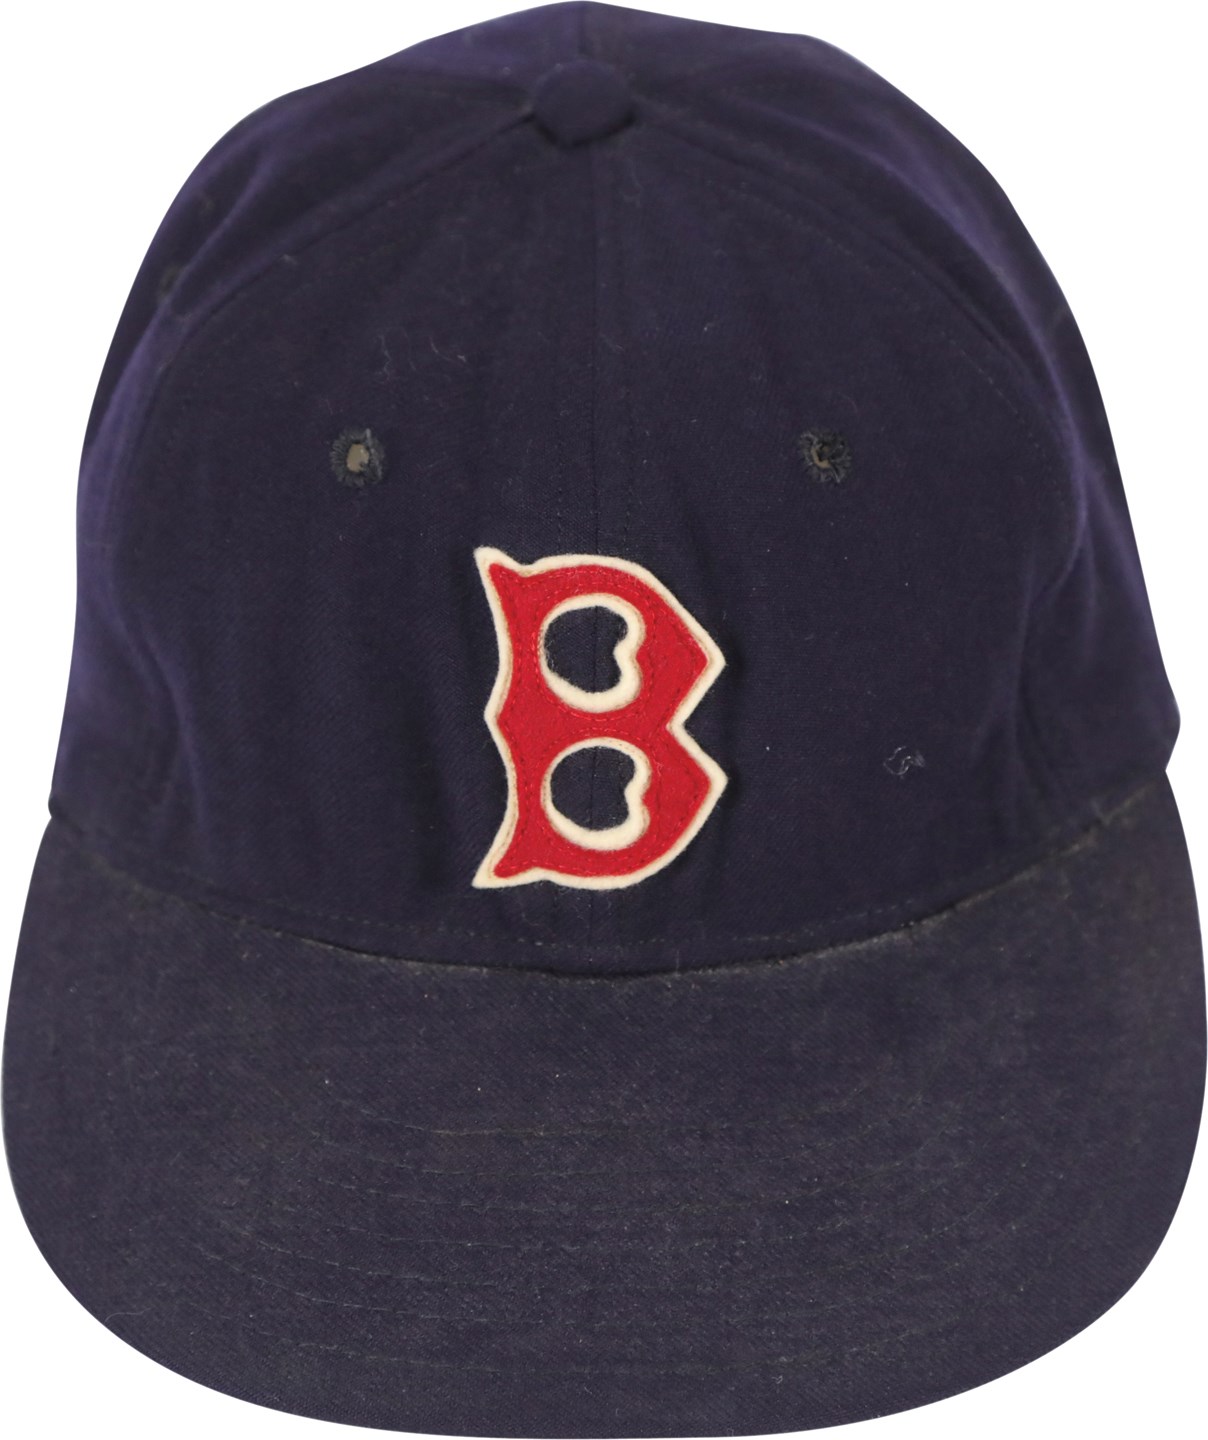 - 1940s Boston Red Sox Professional Model Cap w/Sewn on Felt "B"